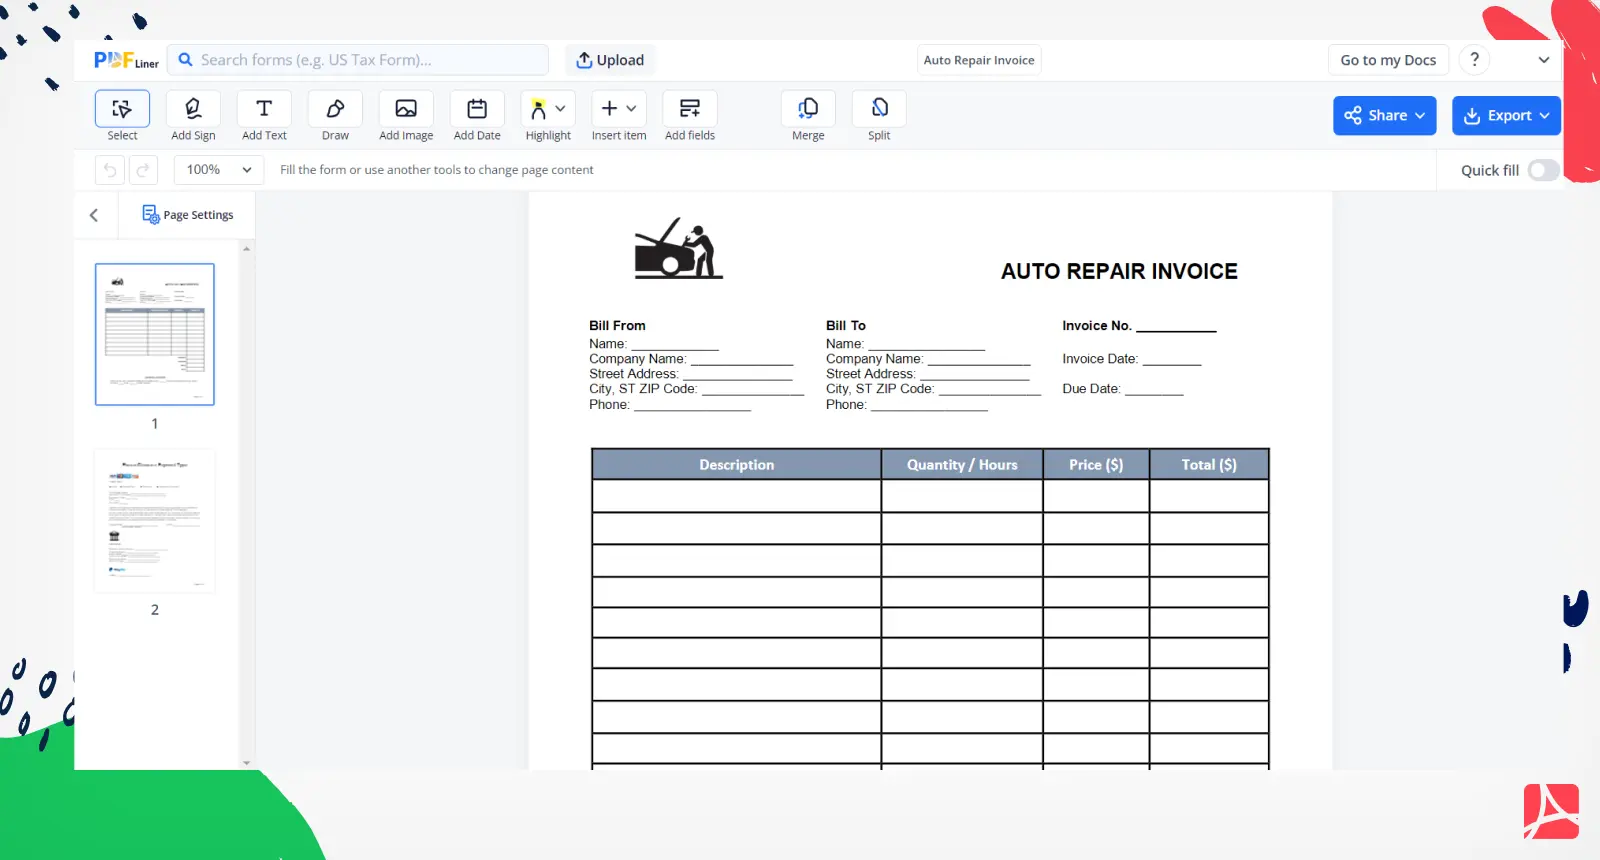 Auto Repair Invoice Screenshot